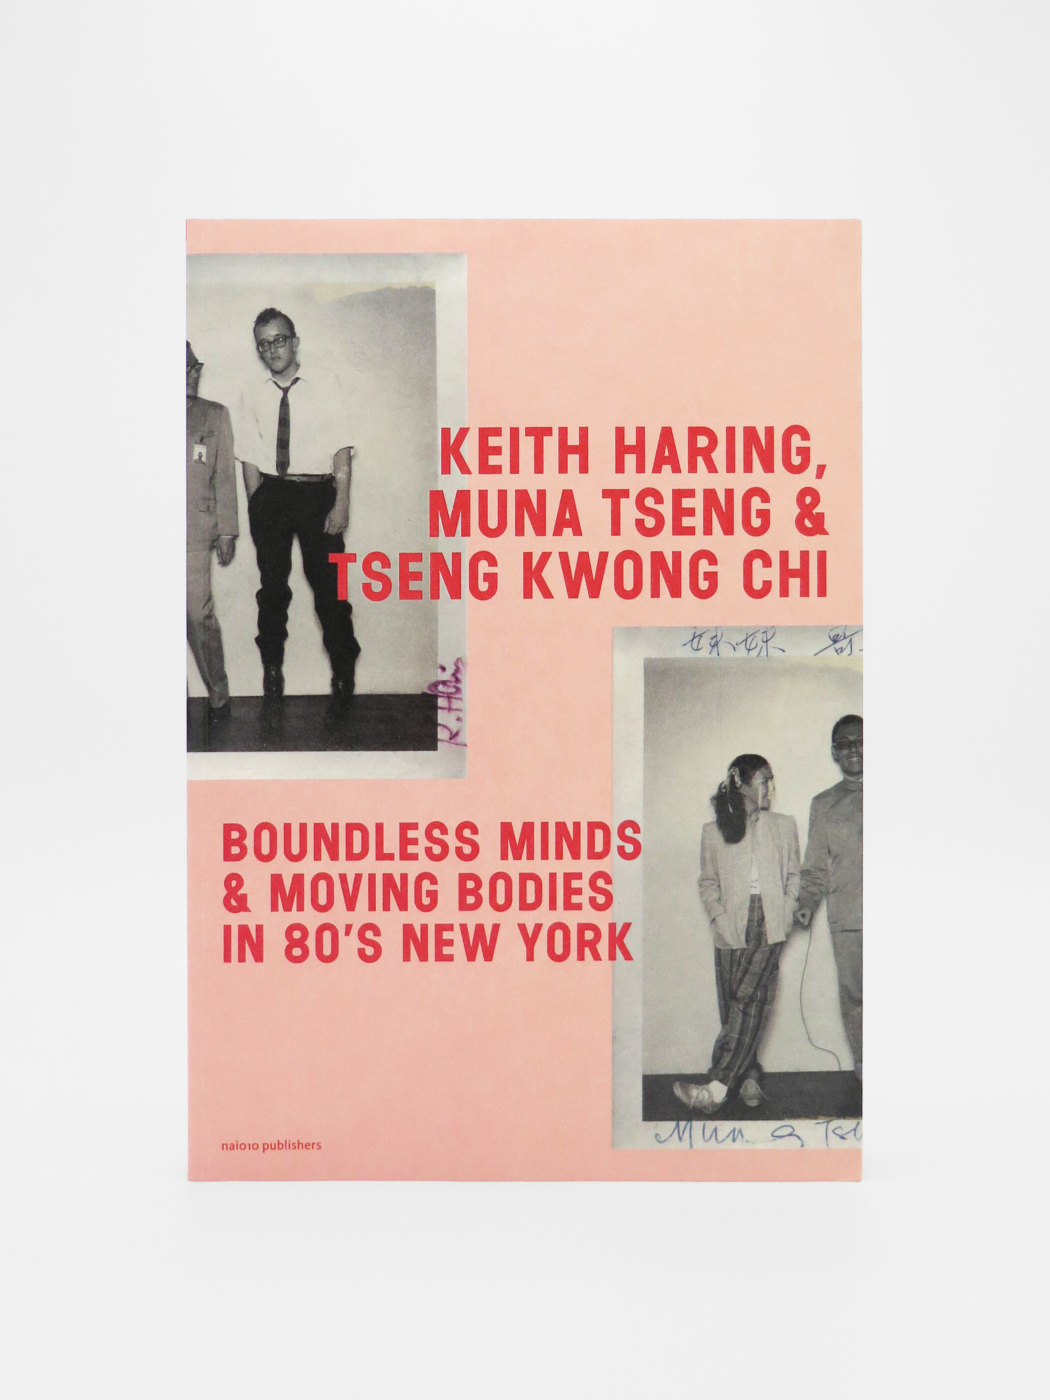 Keith Haring, Muna Tseng & Tseng Kwong Chi, Boundless Minds & Moving Bodies in 80s New York